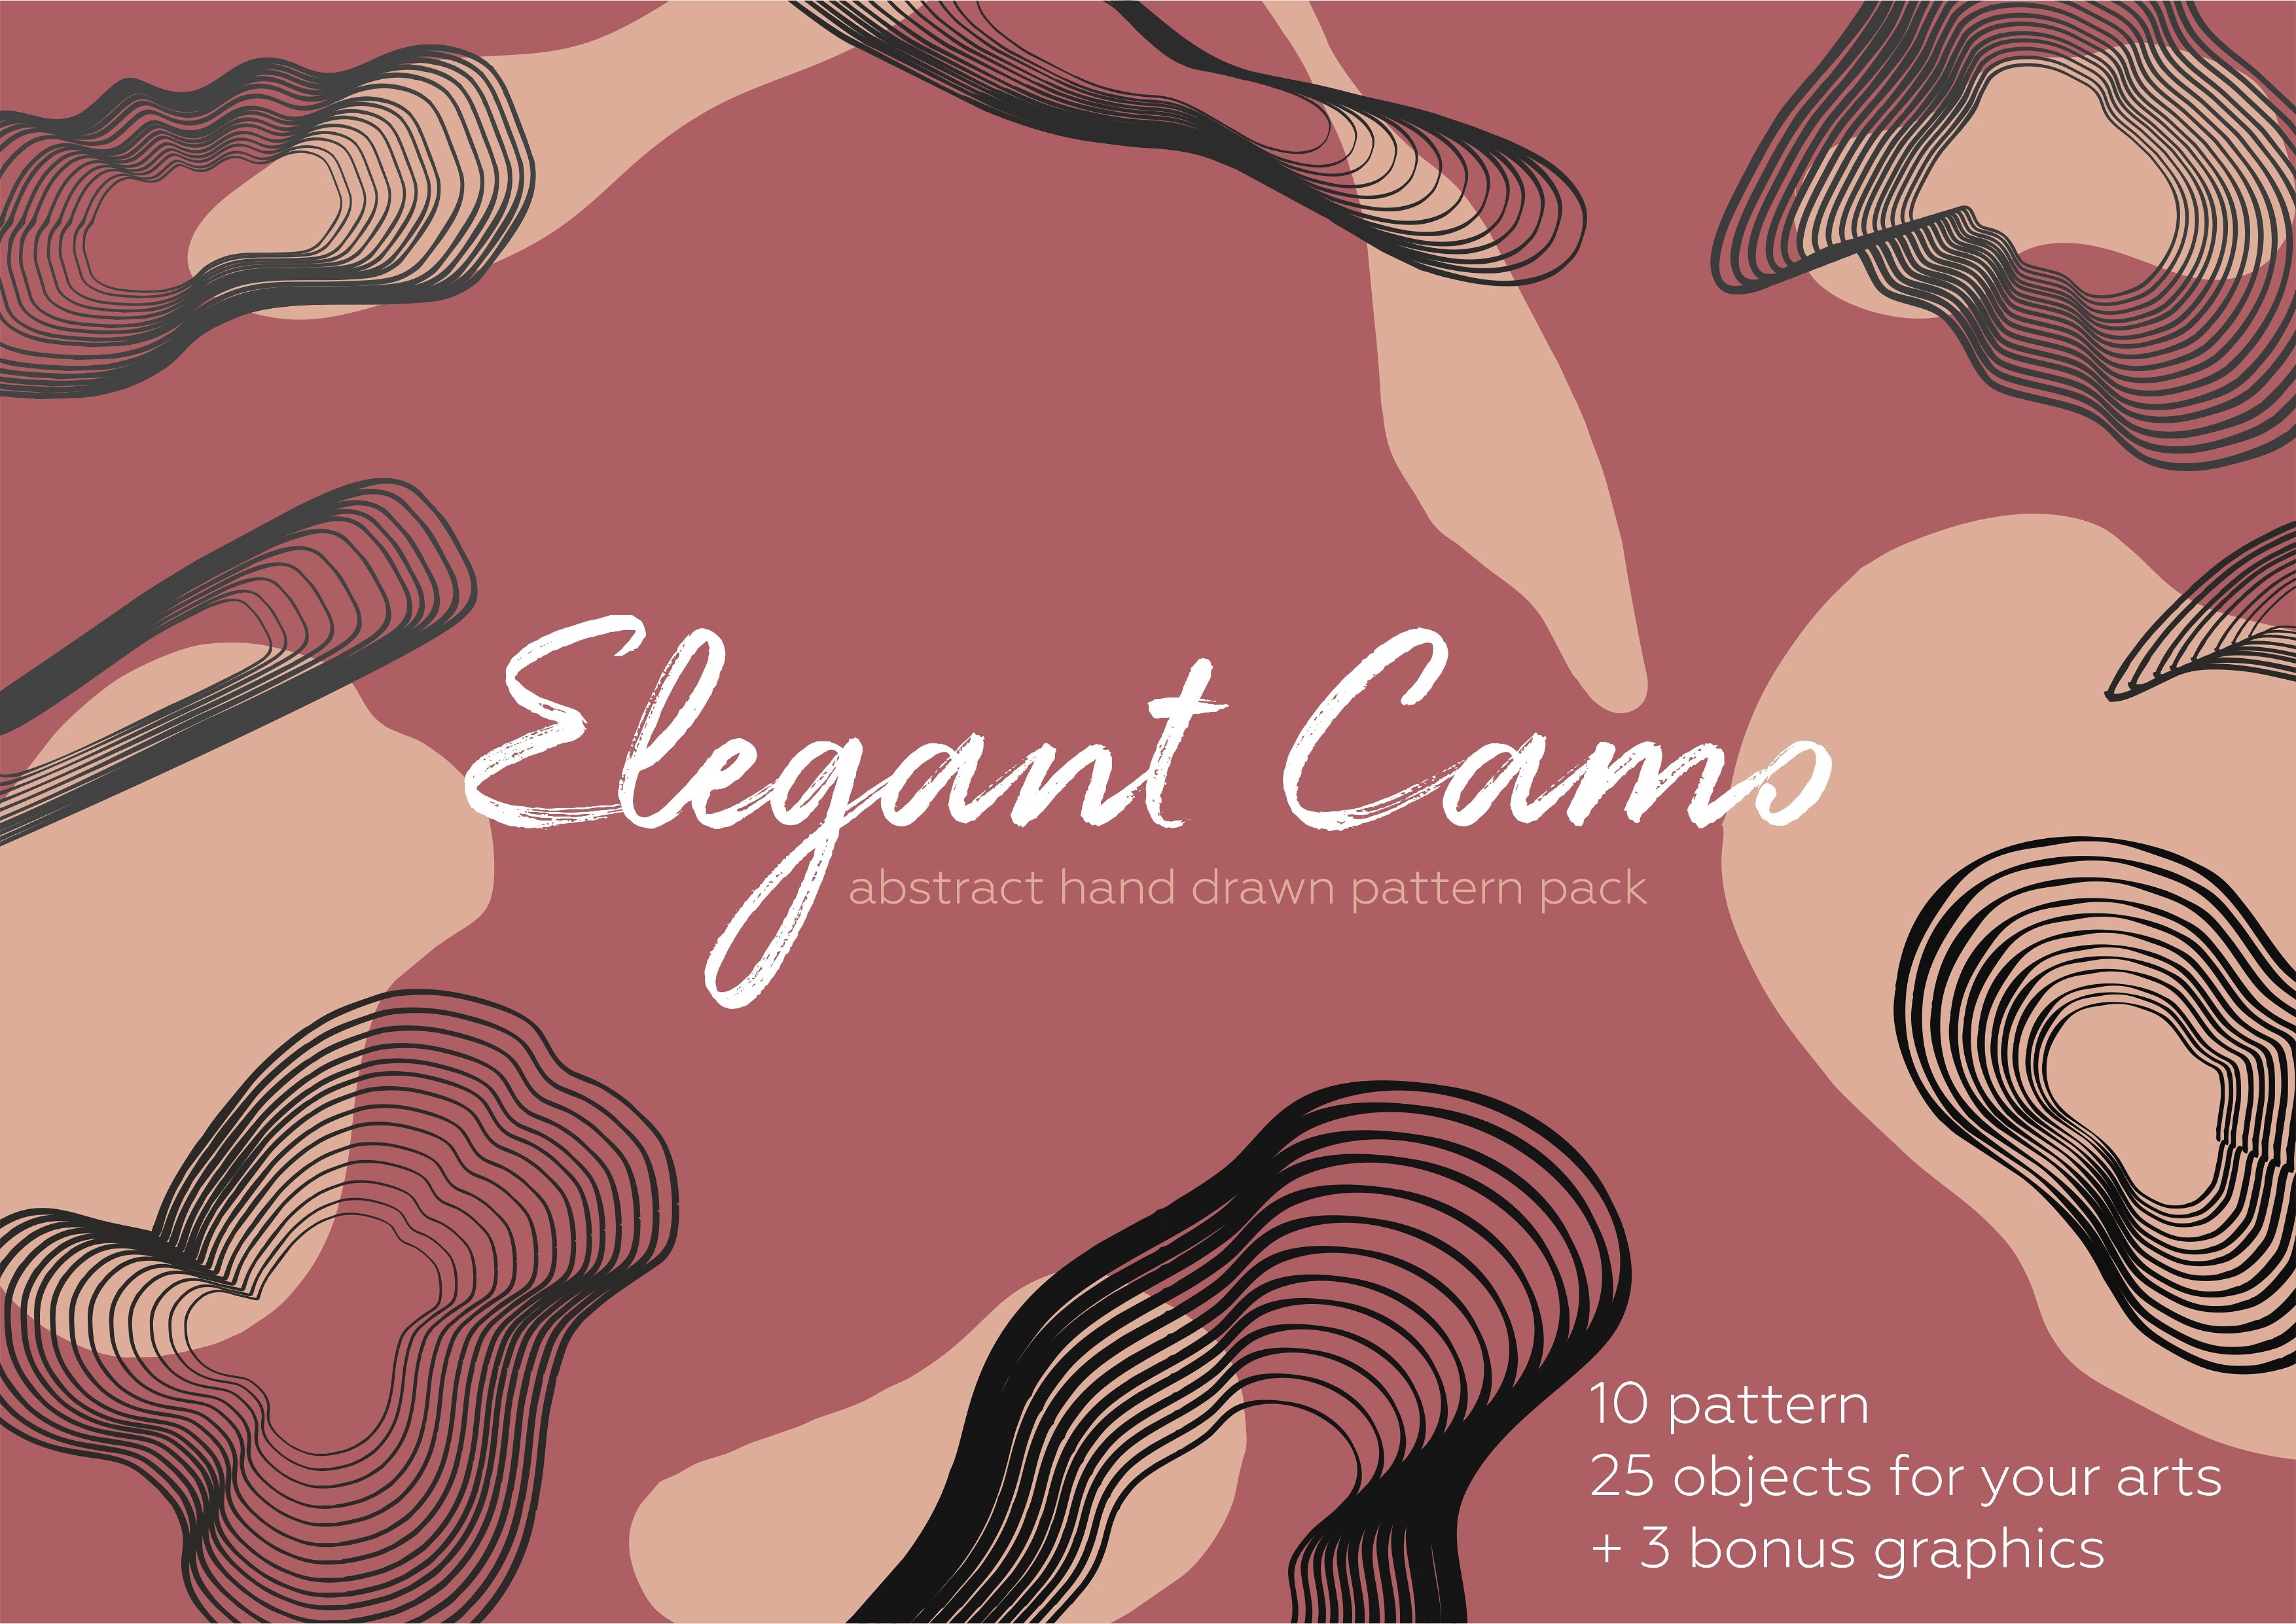 优雅迷彩抽象图案包 Elegant Camouflage Abstract Pattern Pack插图